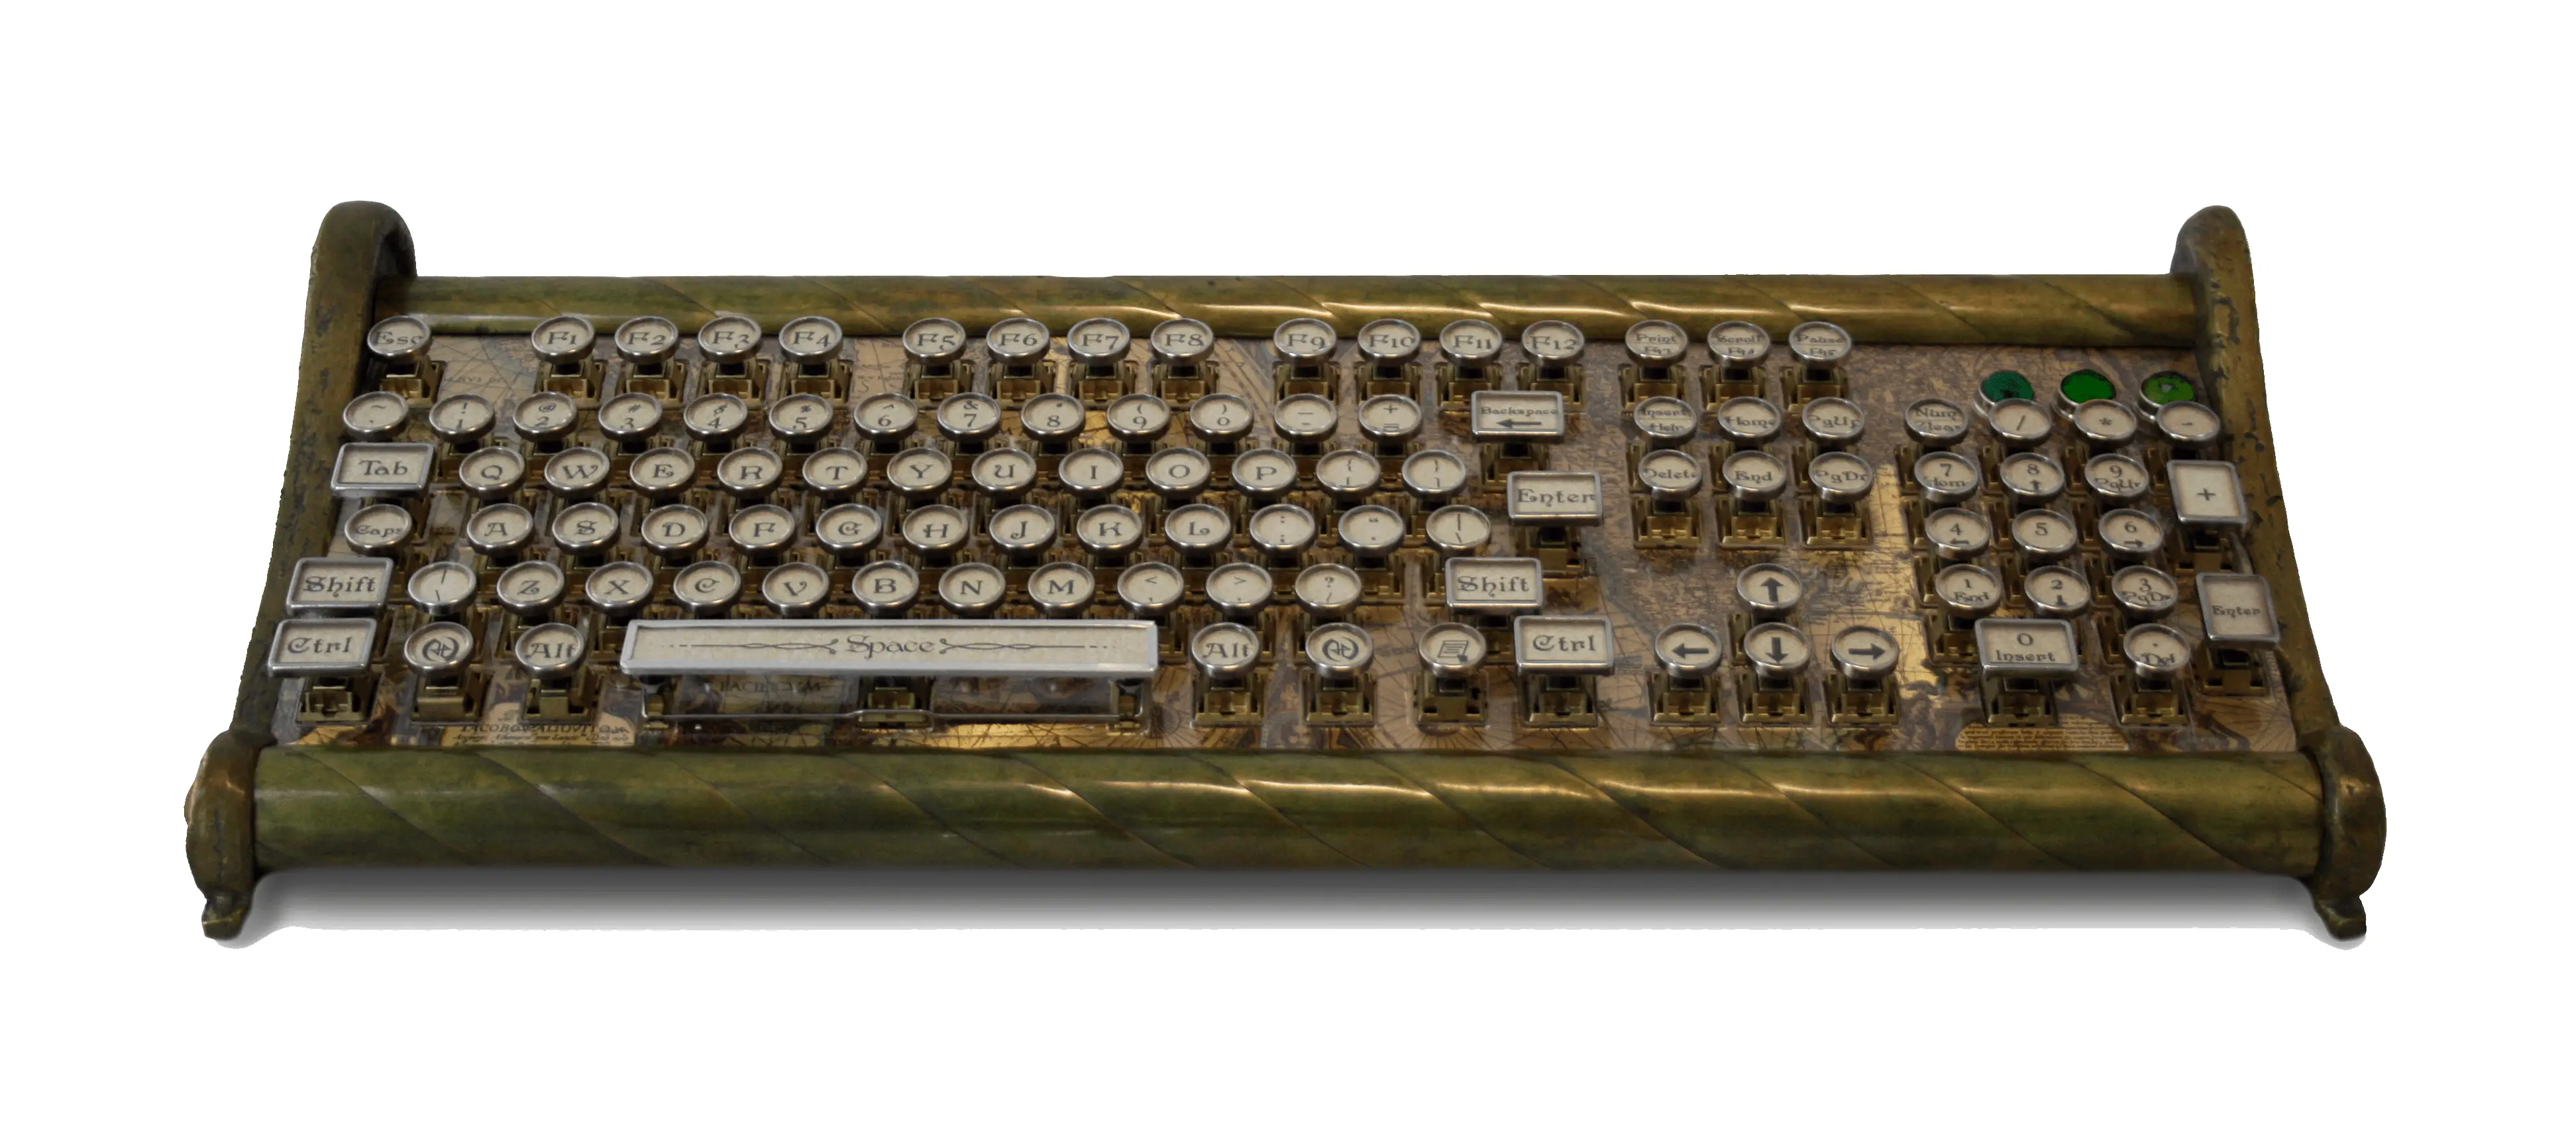 Seafarer Keyboard